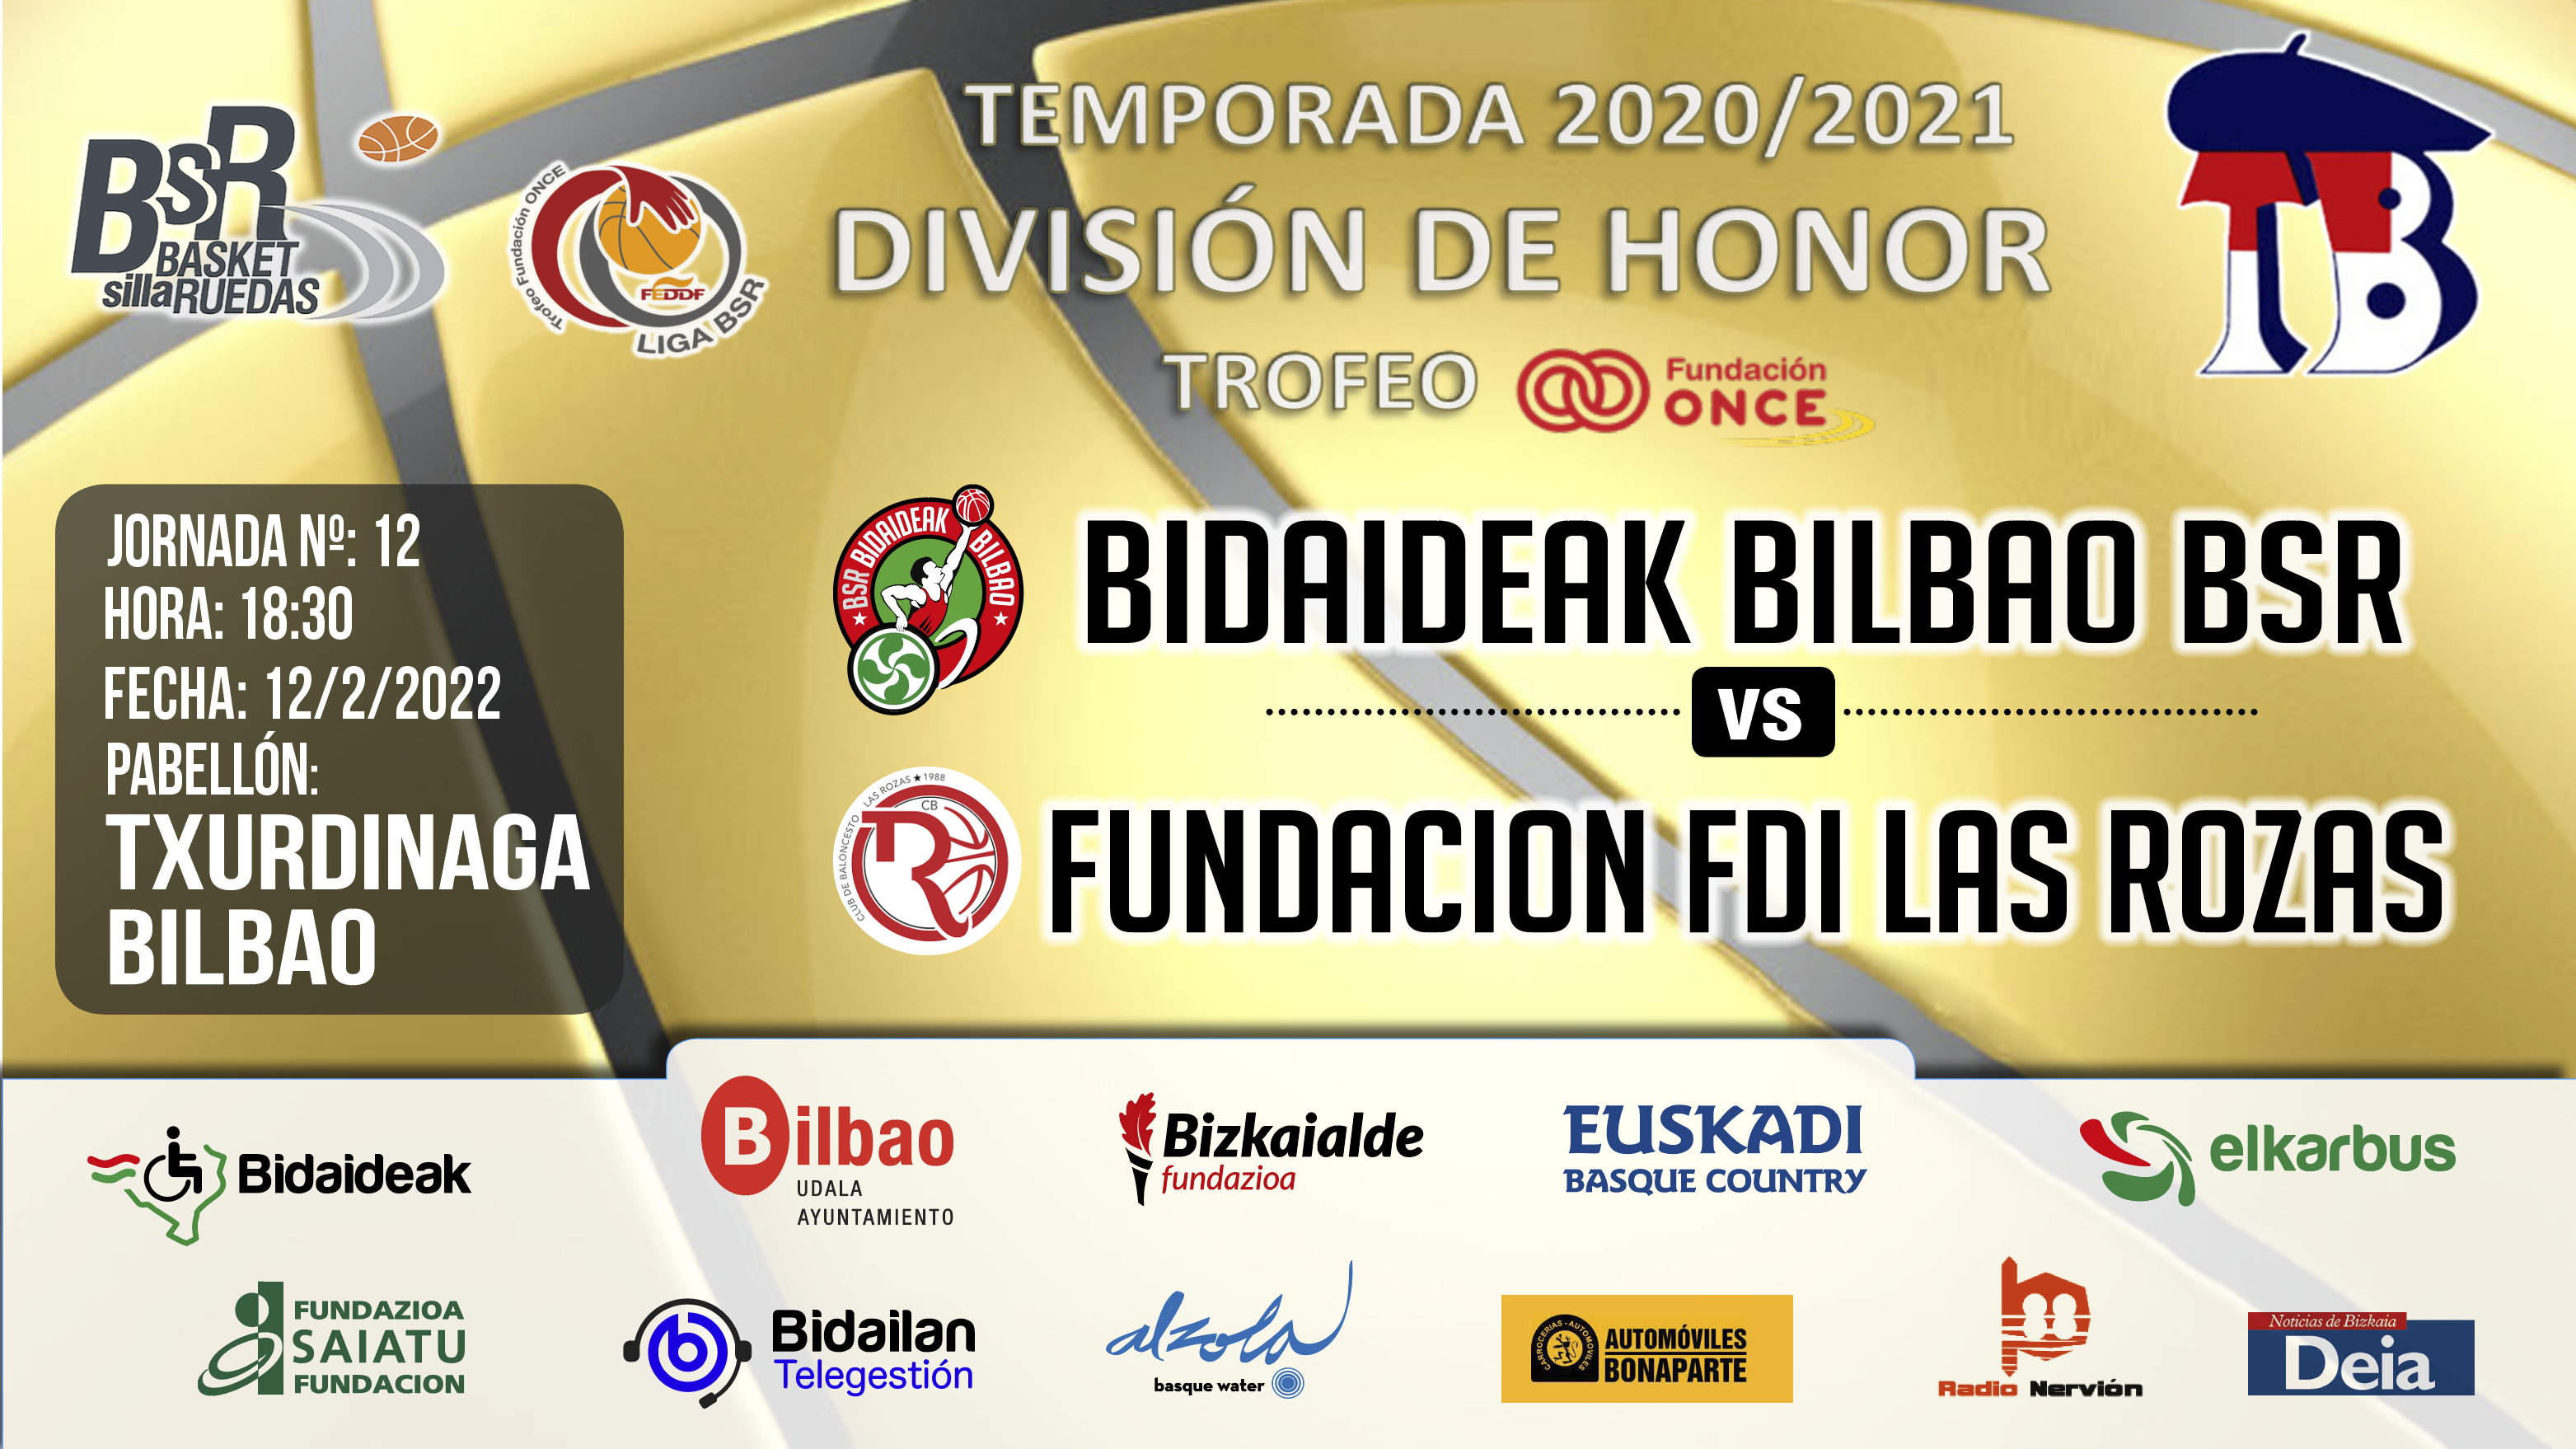 Bilbao Bsr Club Bilbao Bsr De Baloncesto En Silla De Rueda